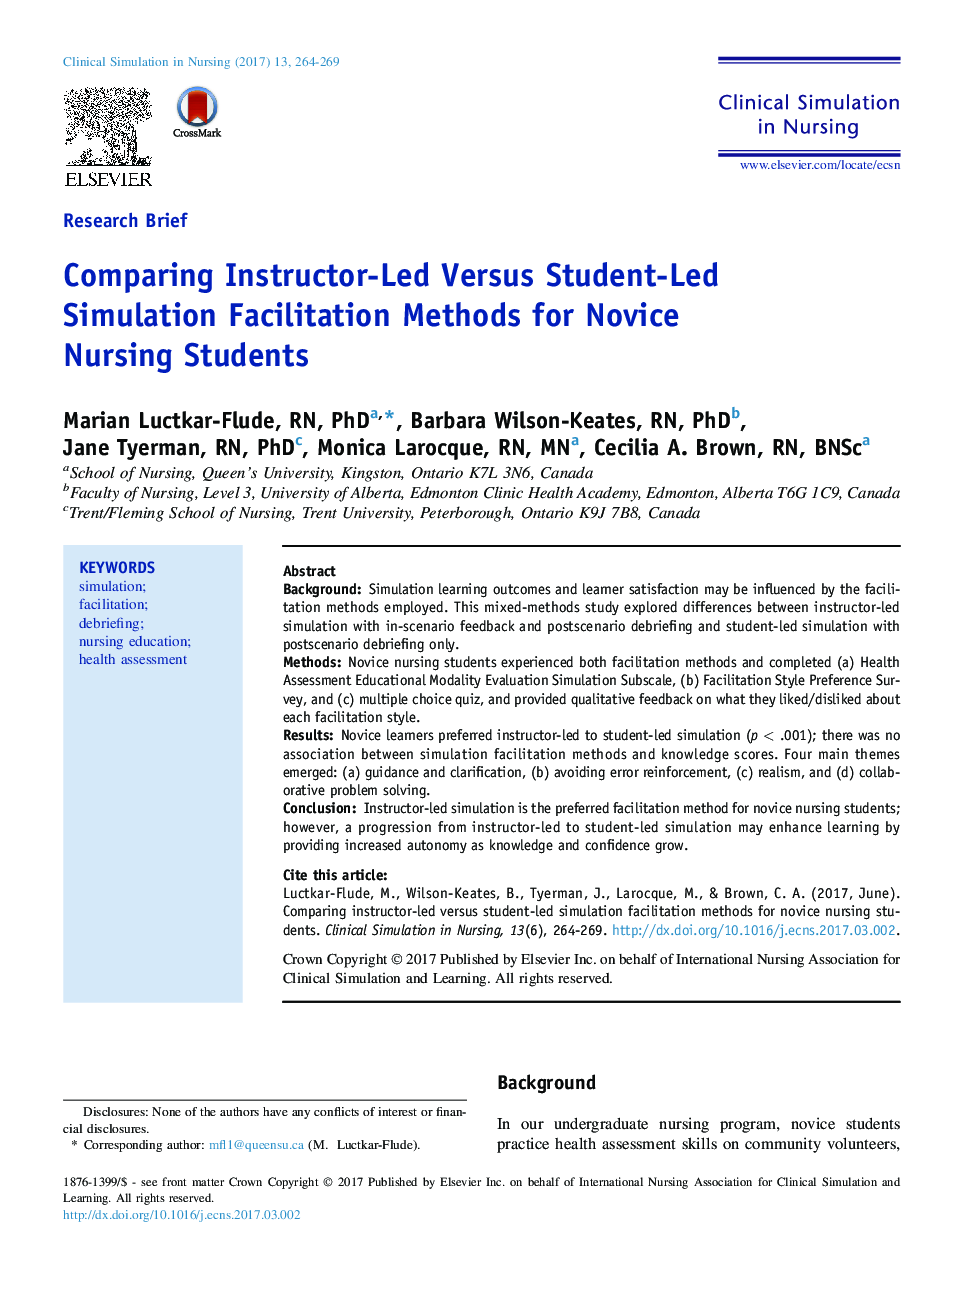 Comparing Instructor-Led Versus Student-Led Simulation Facilitation Methods for Novice Nursing Students